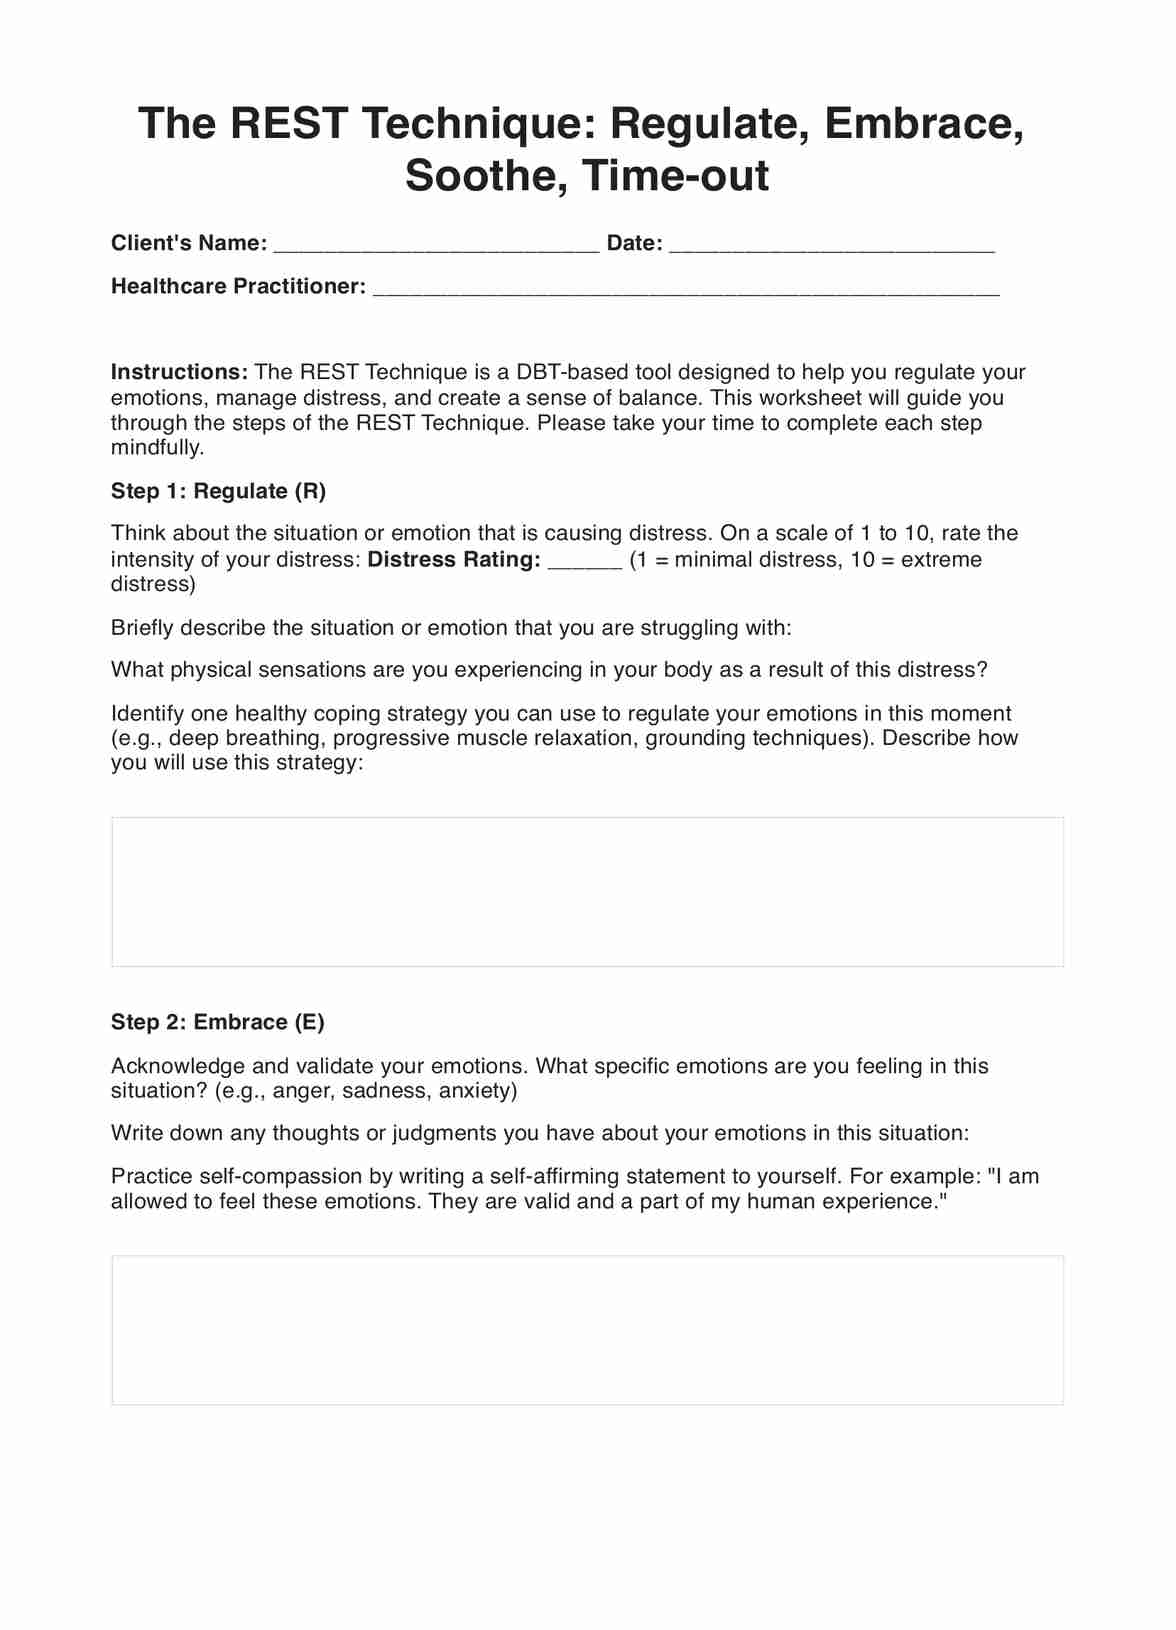 The Rest Technique DBT Worksheet PDF Example